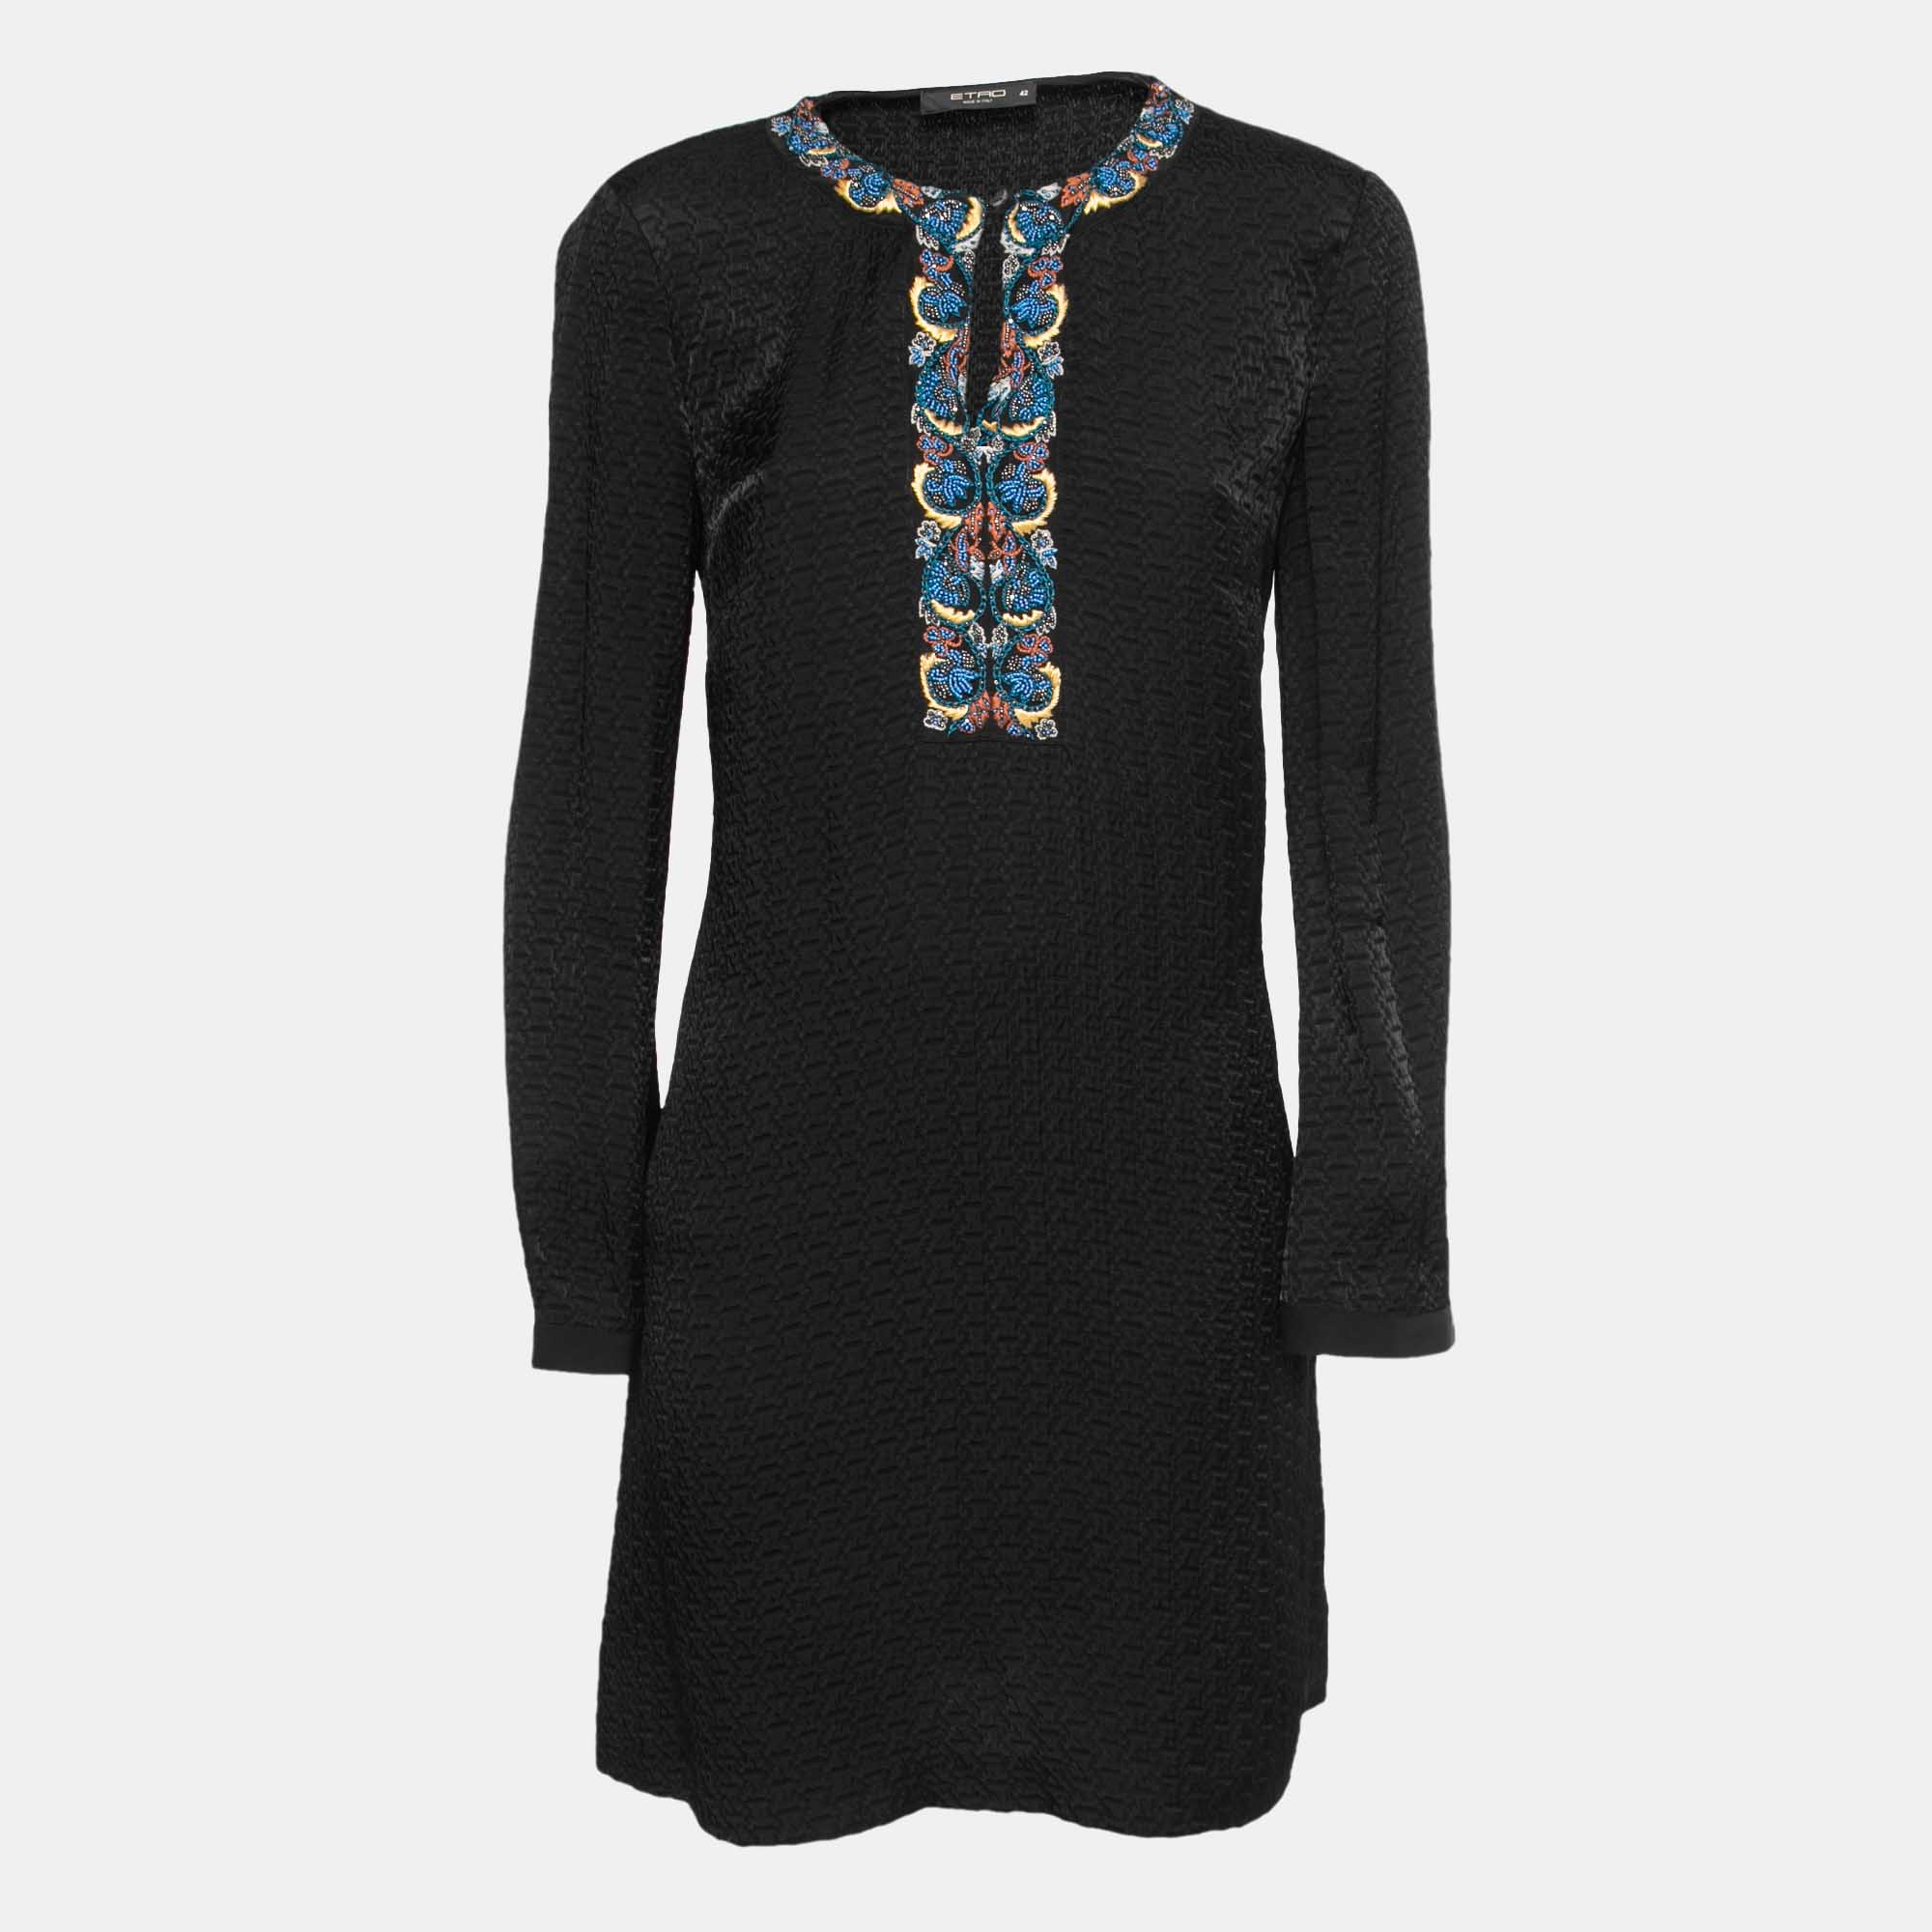 Etro Black Textured Crepe Embellished Neckline Full Sleeve Short Dress M